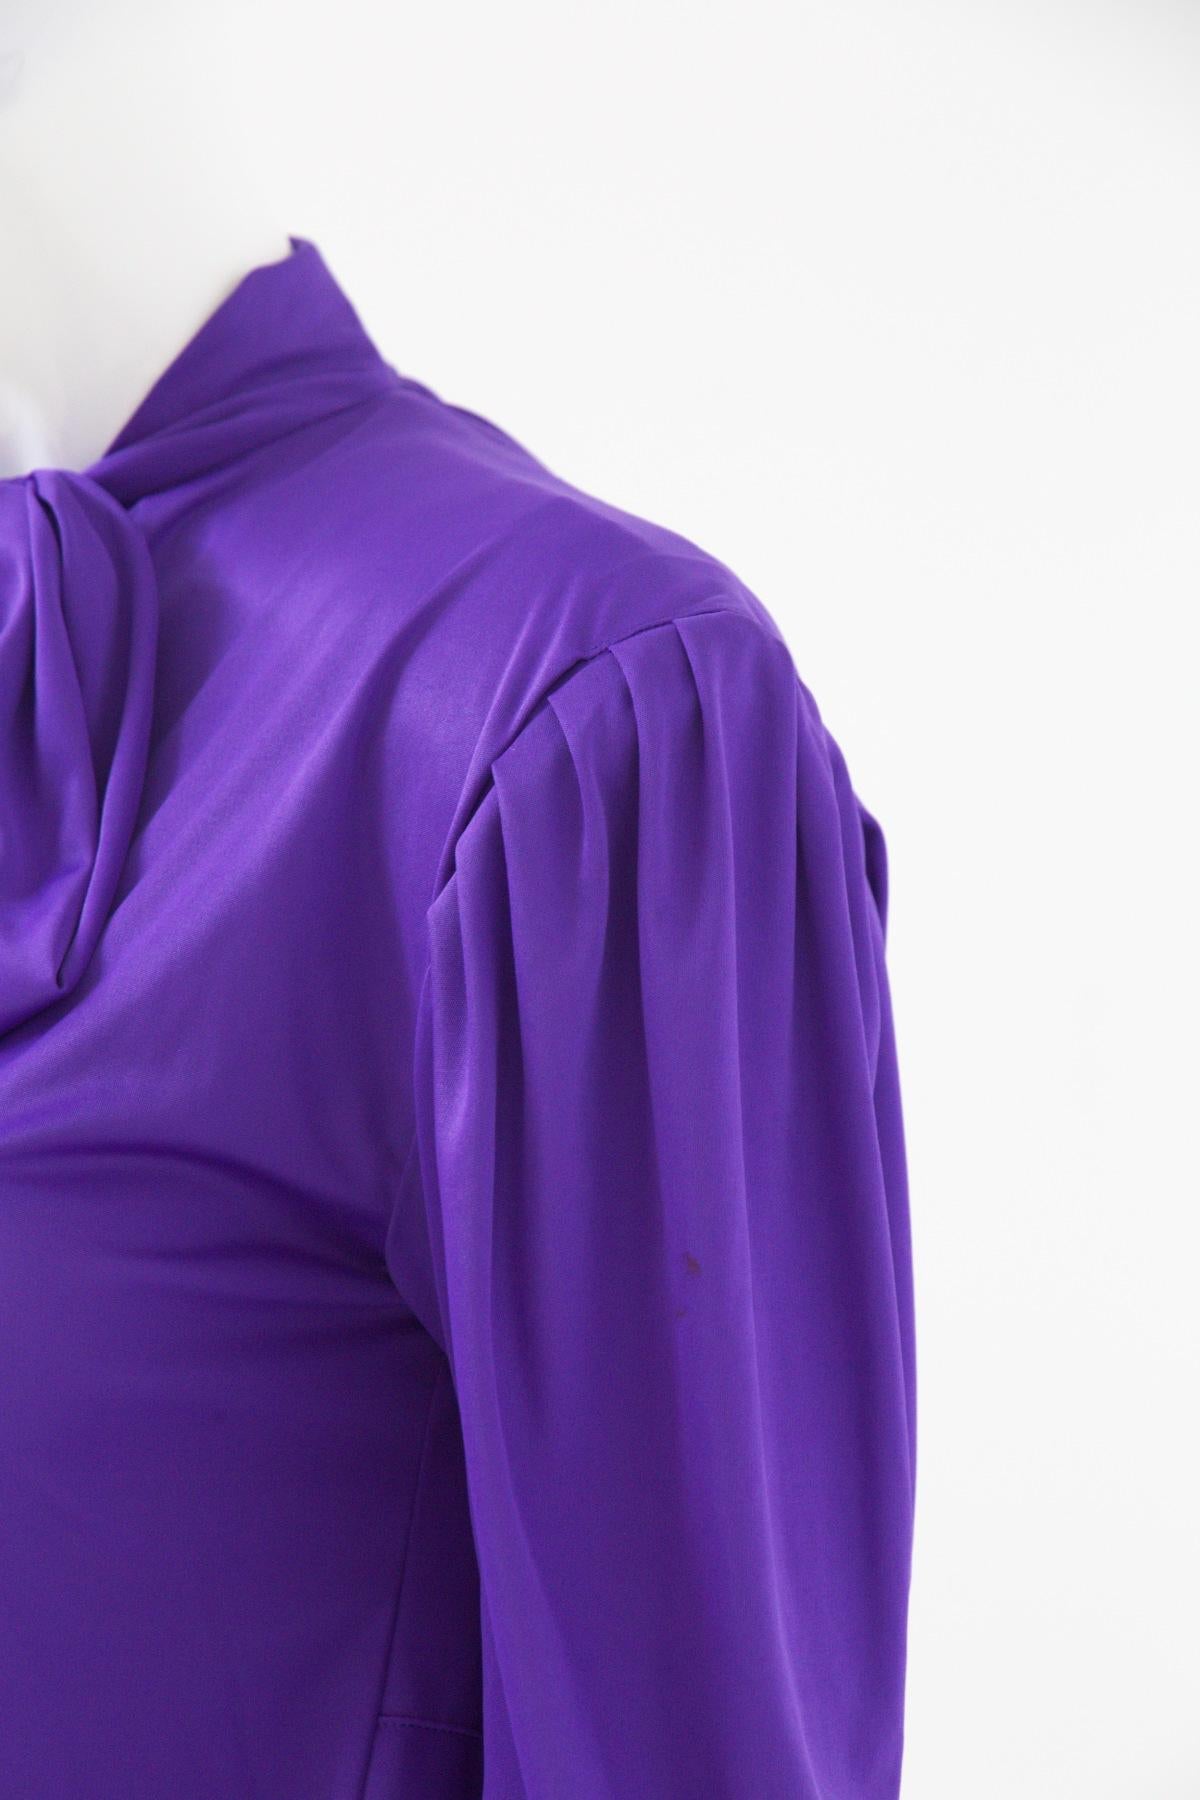 Balenciaga Luxurious Vintage Purple Dress For Sale 3